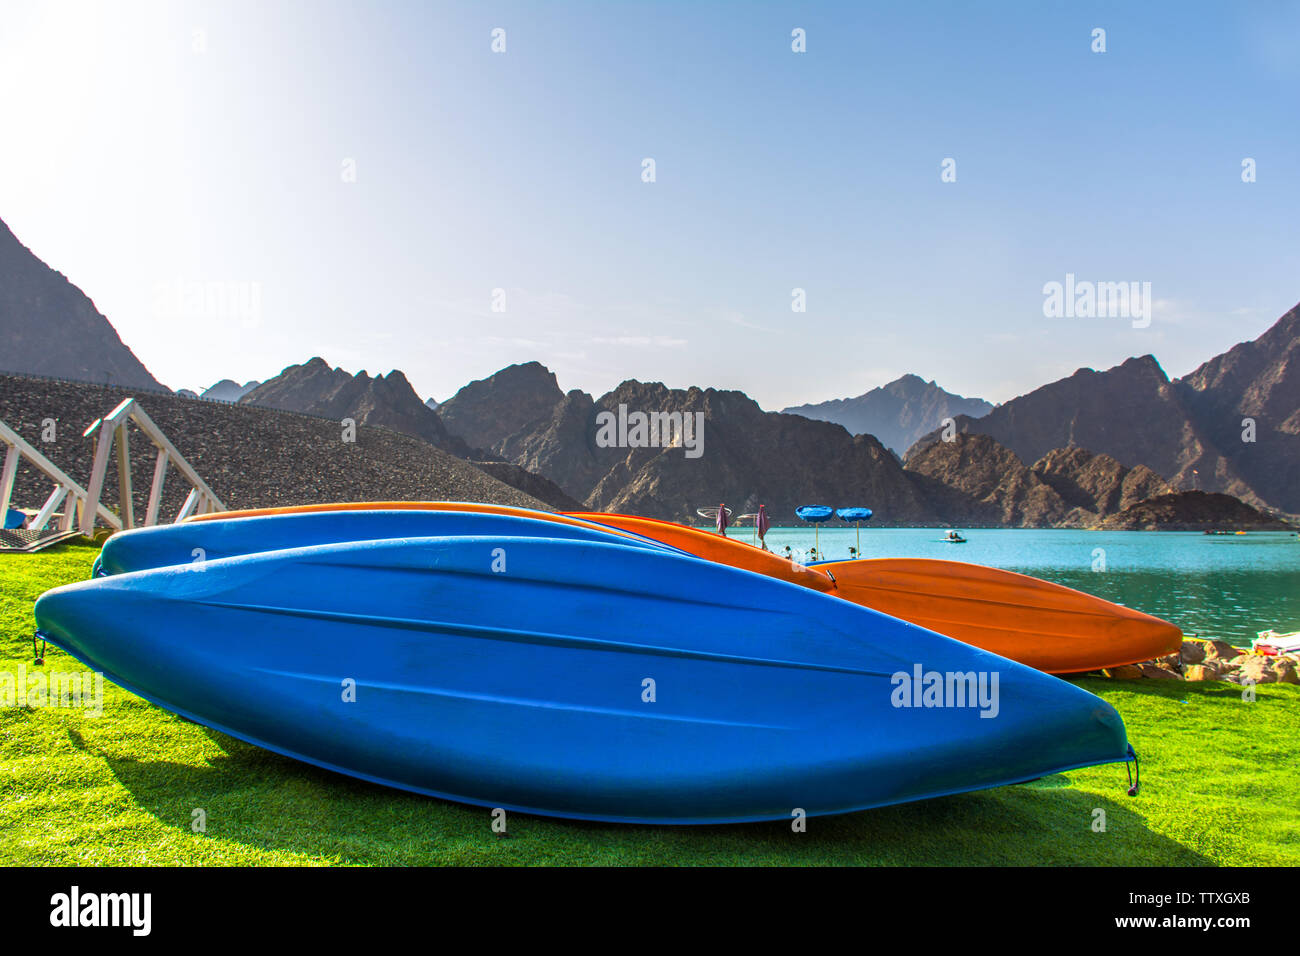 Best place to enjoy water adventure activities like kayaking boating amazing Hatta dam mountain scenery Stock Photo